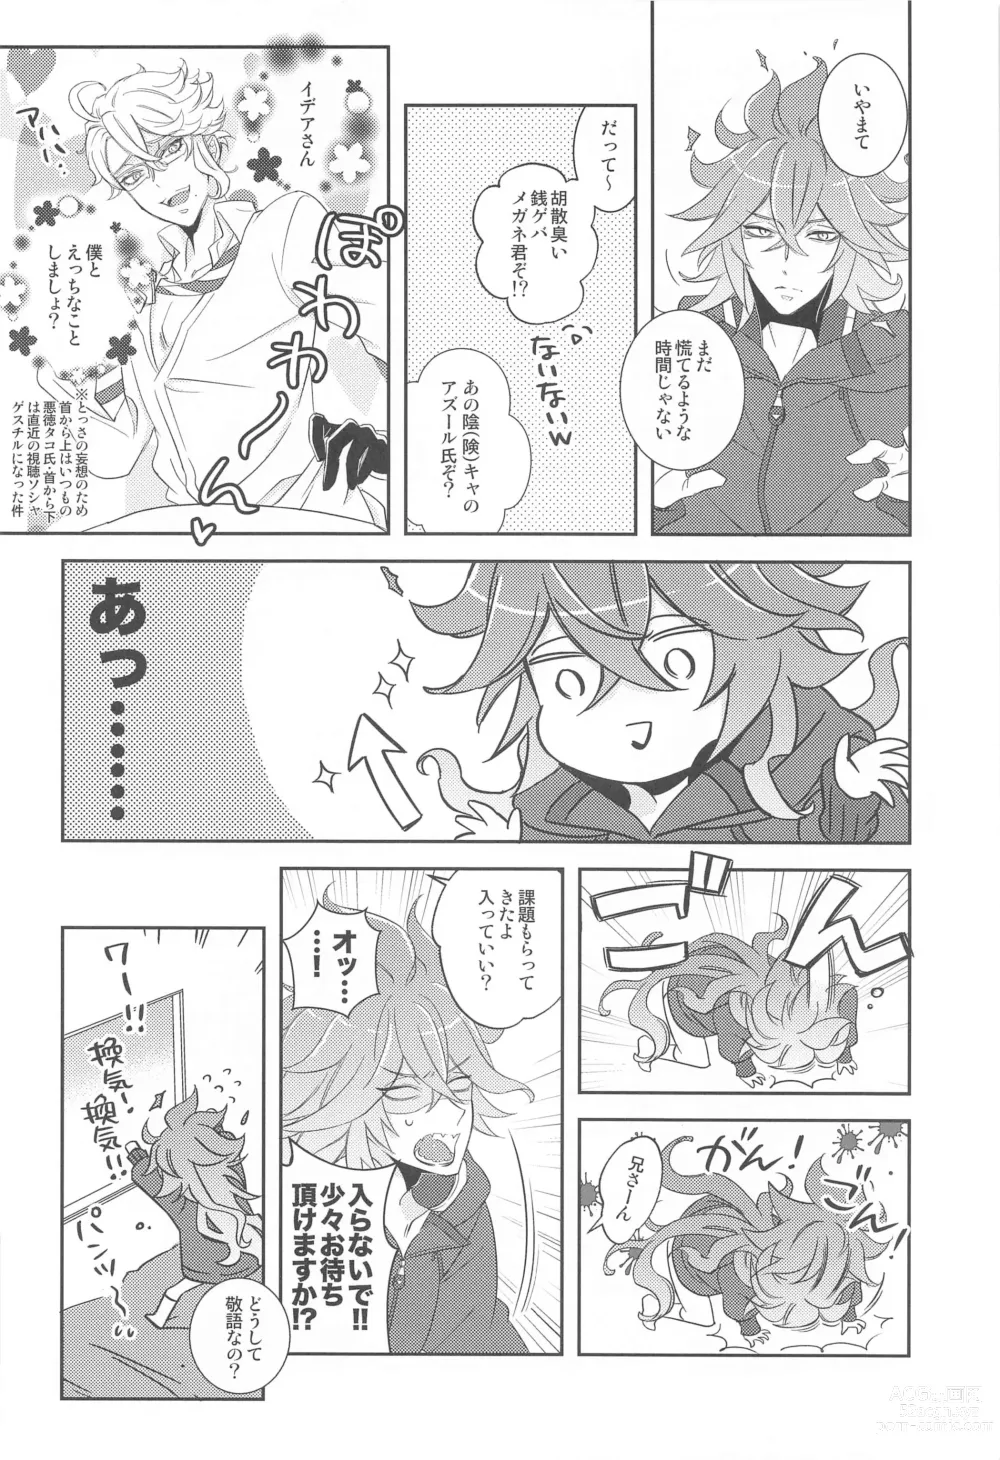 Page 13 of doujinshi Tail!